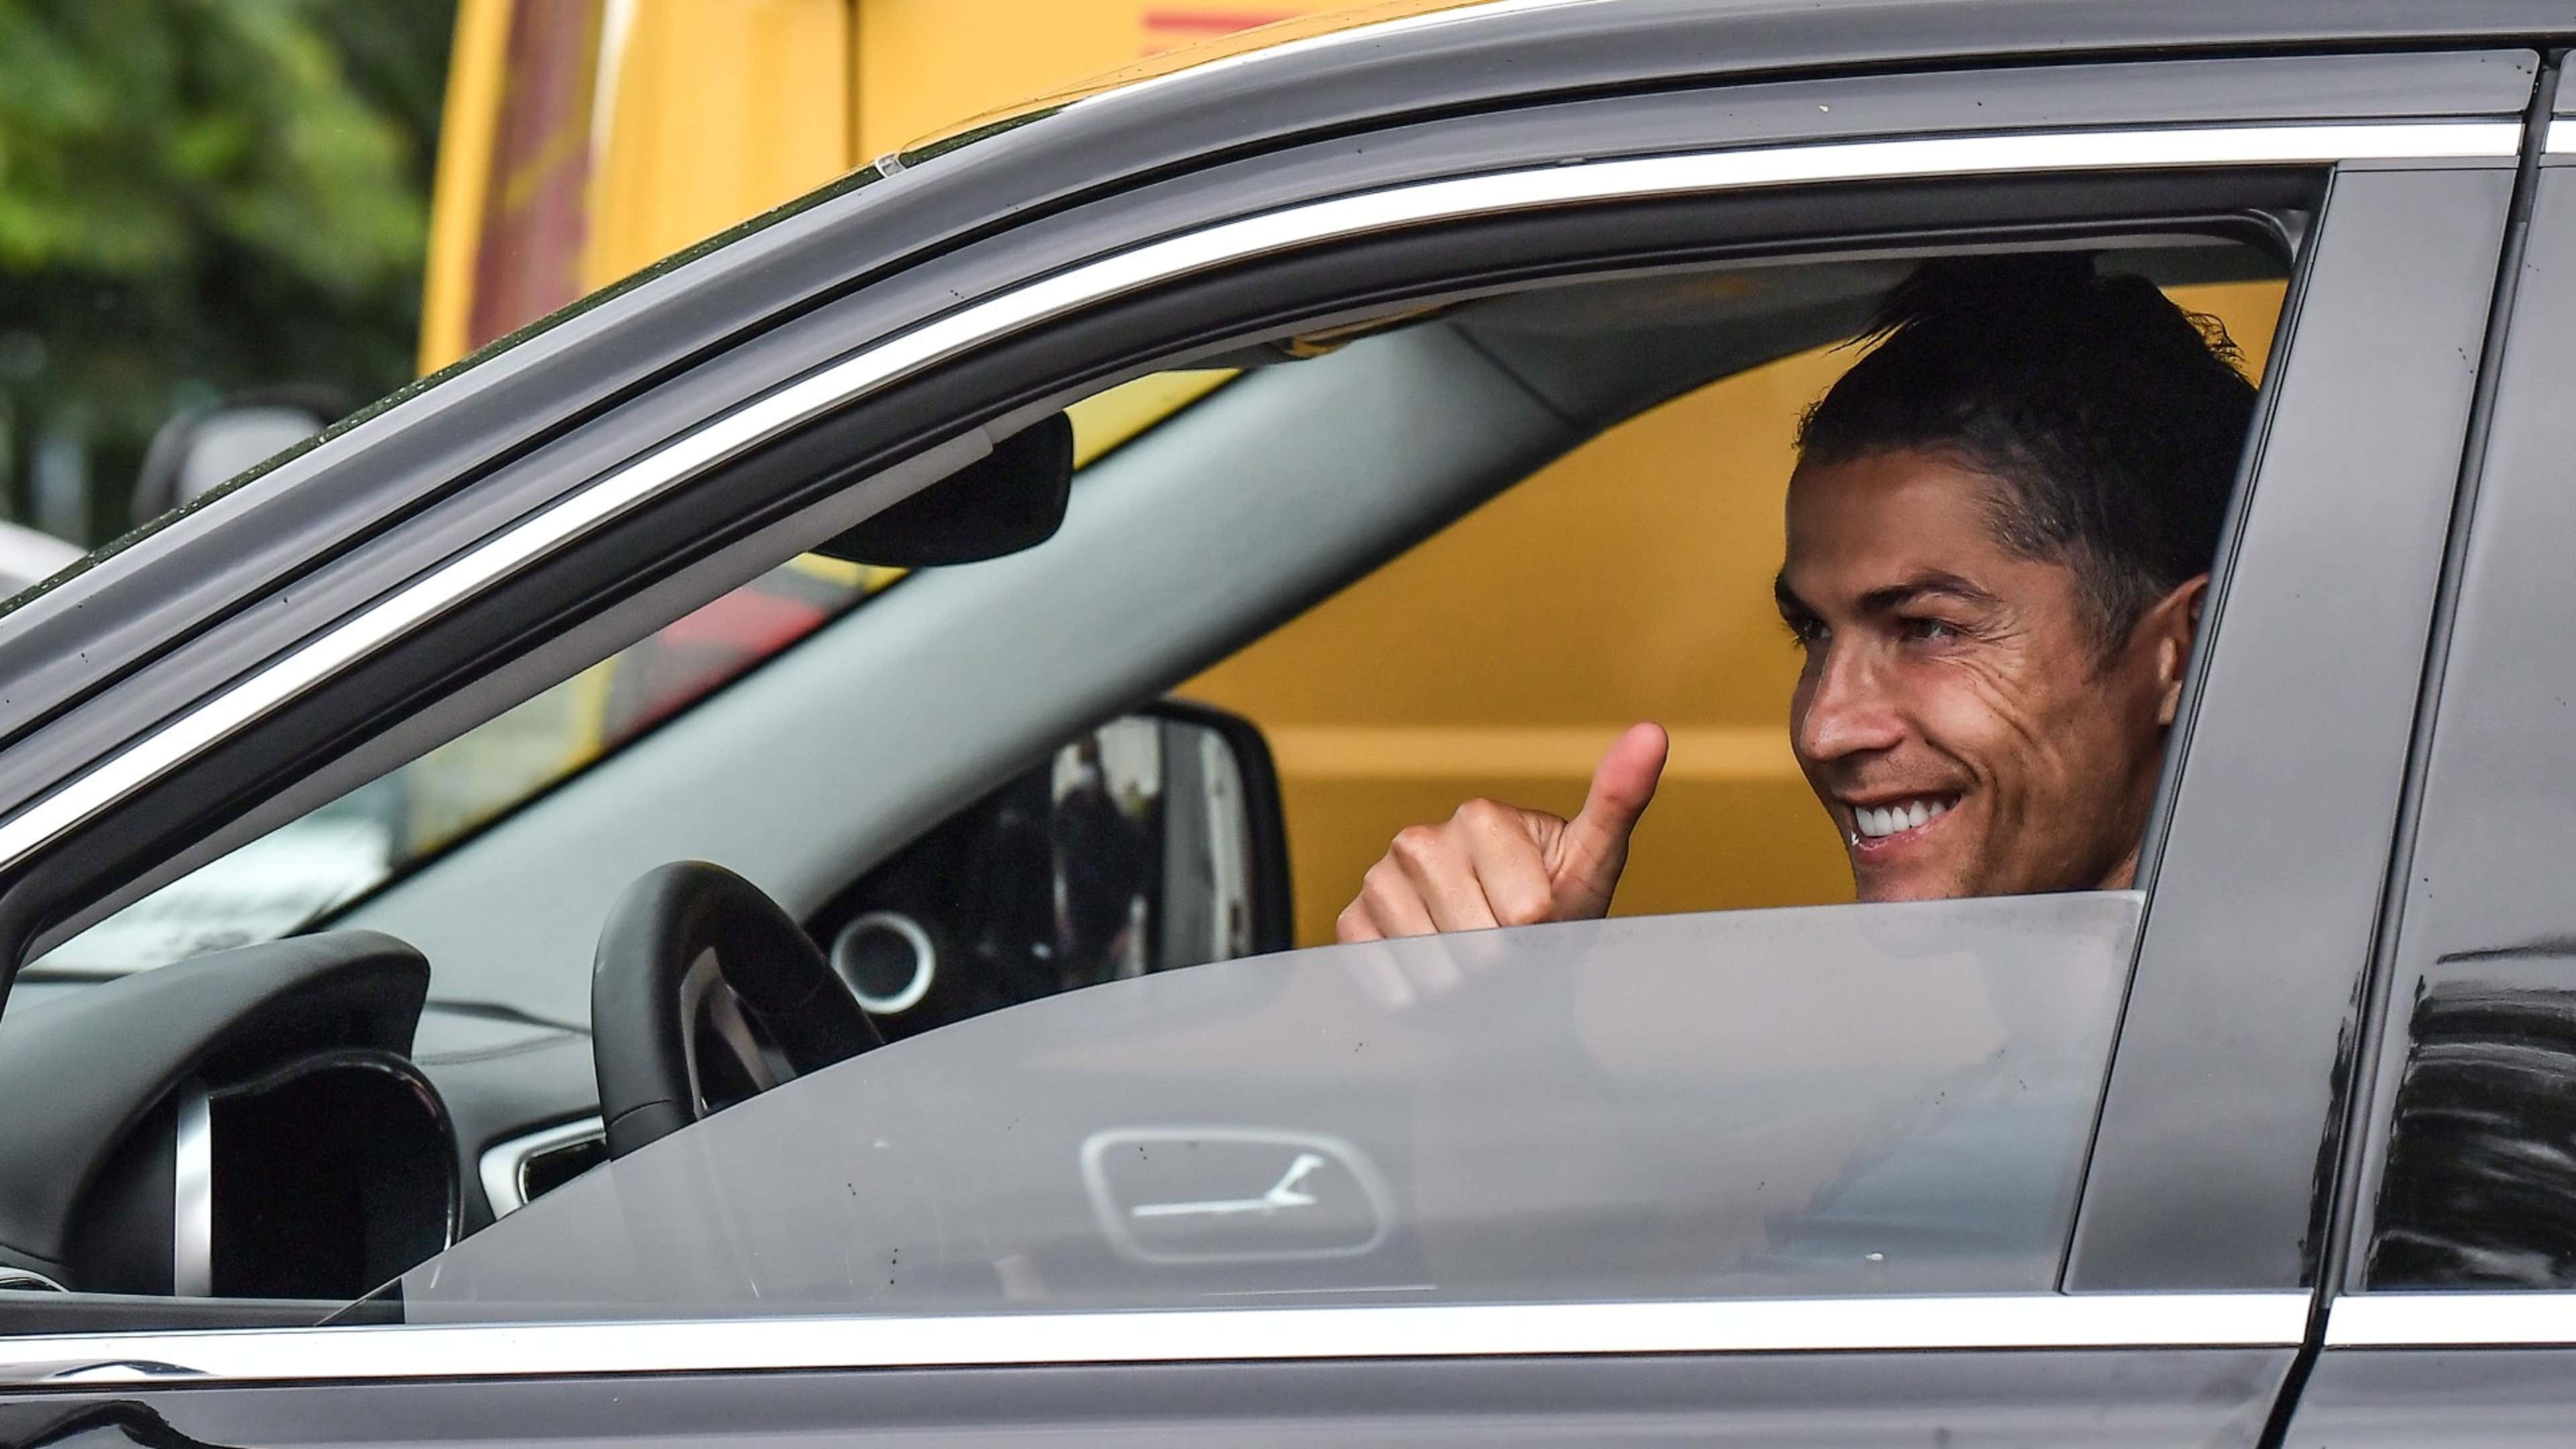 Cristiano Ronaldo car